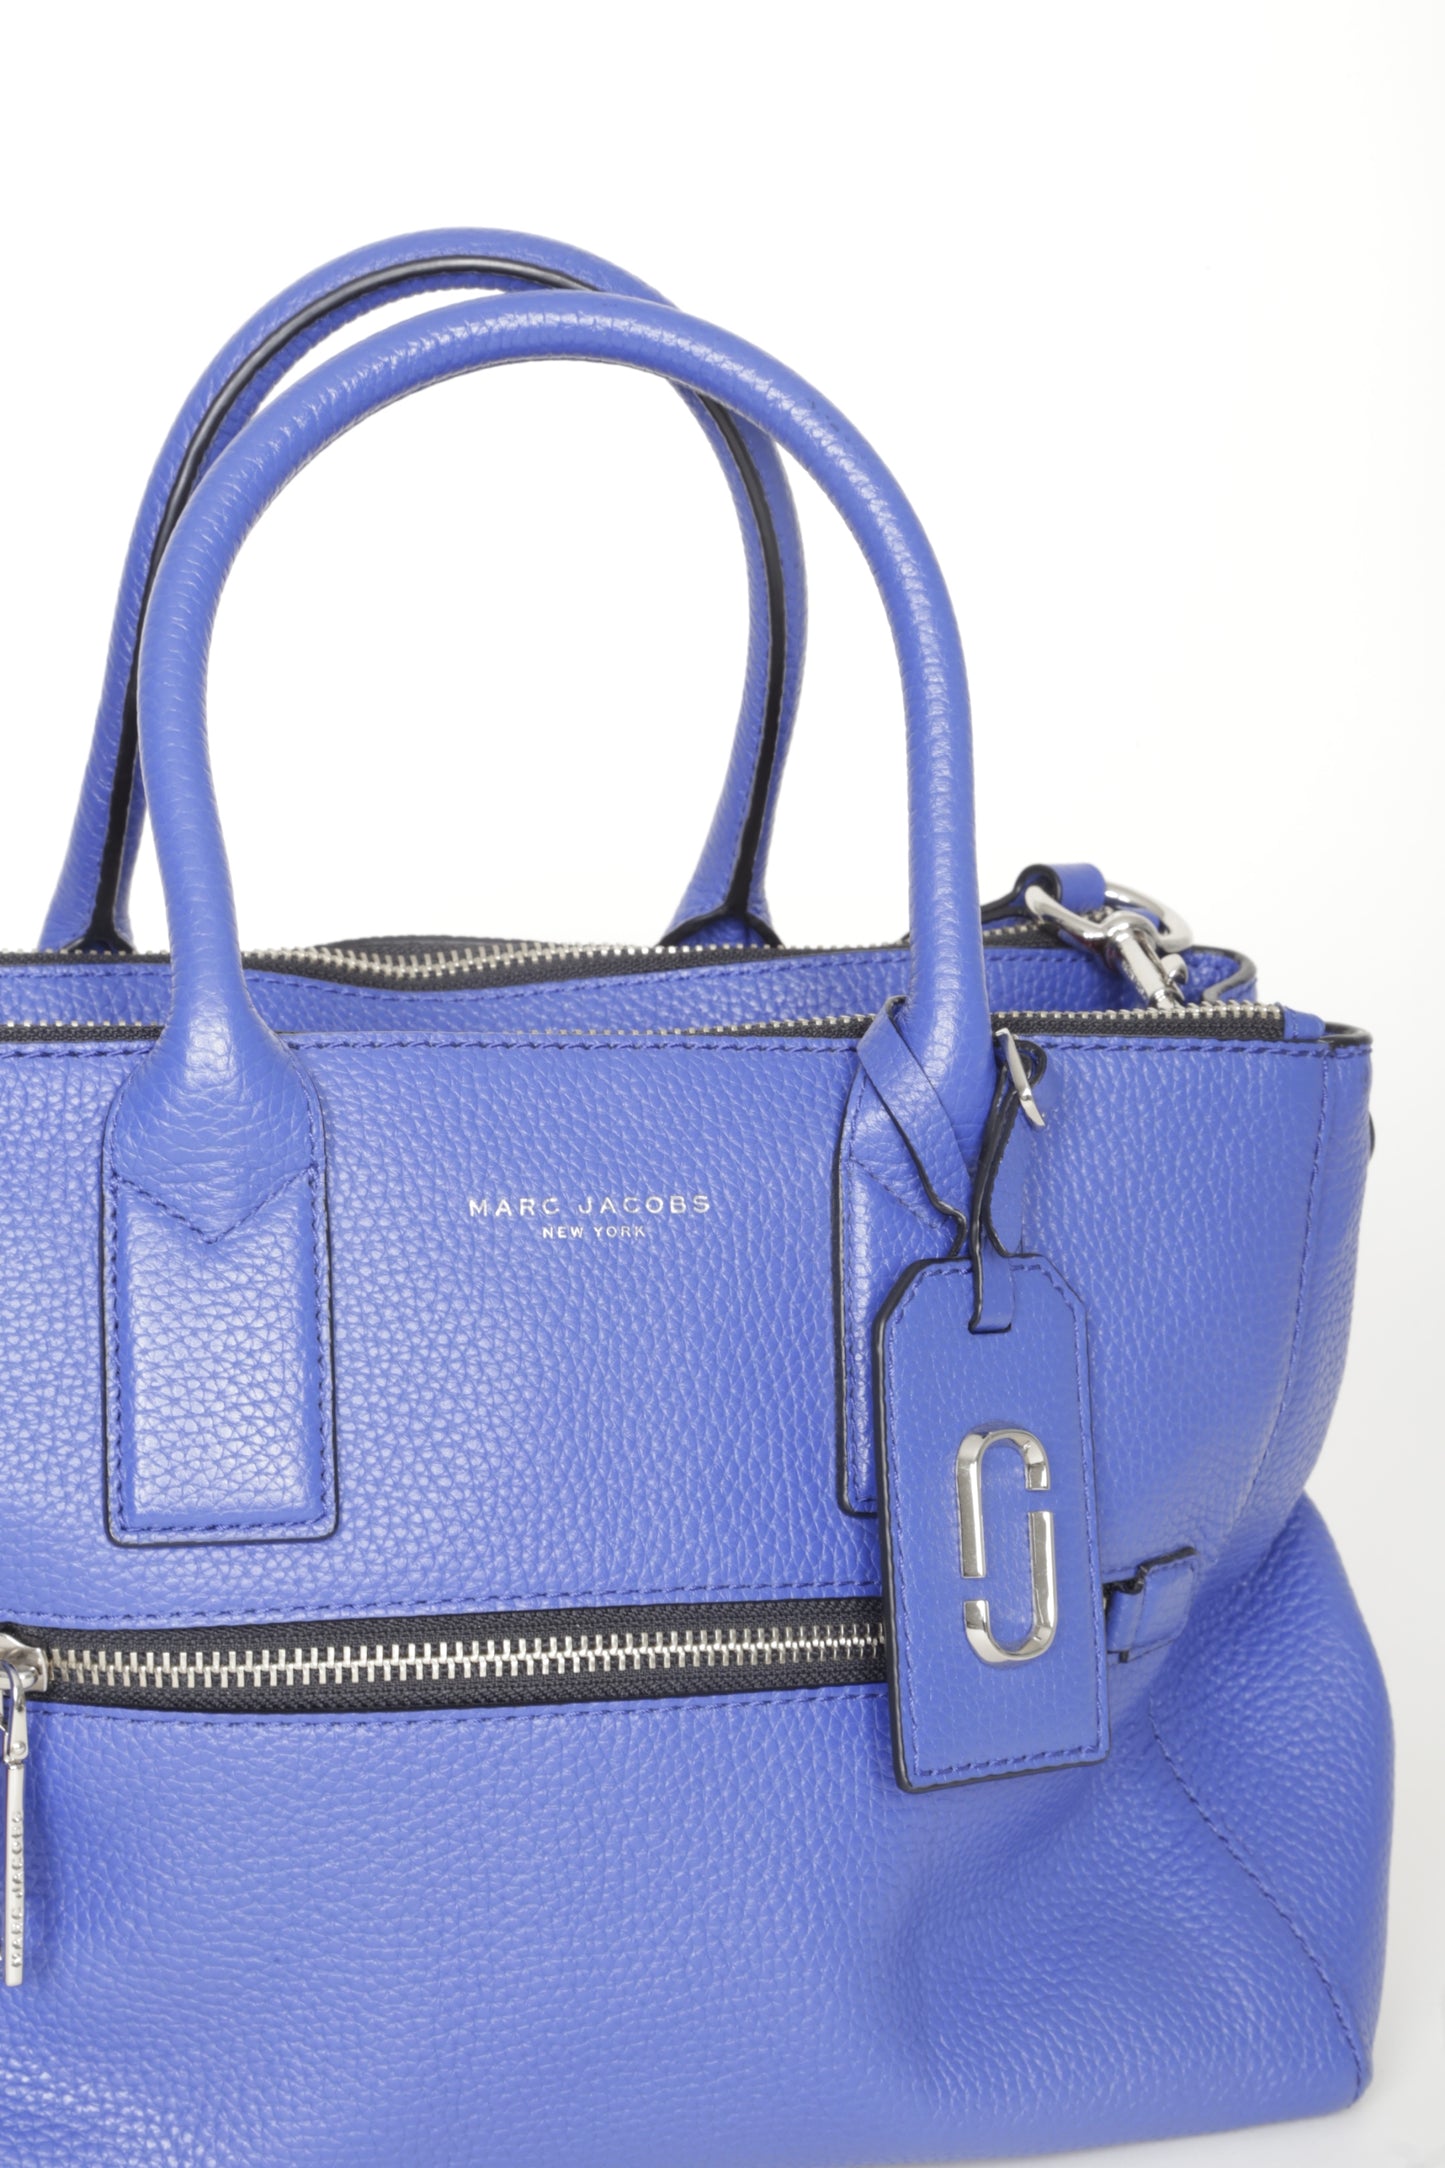 Marc by Marc Jacobs Unisex Blue Bag Size O/S